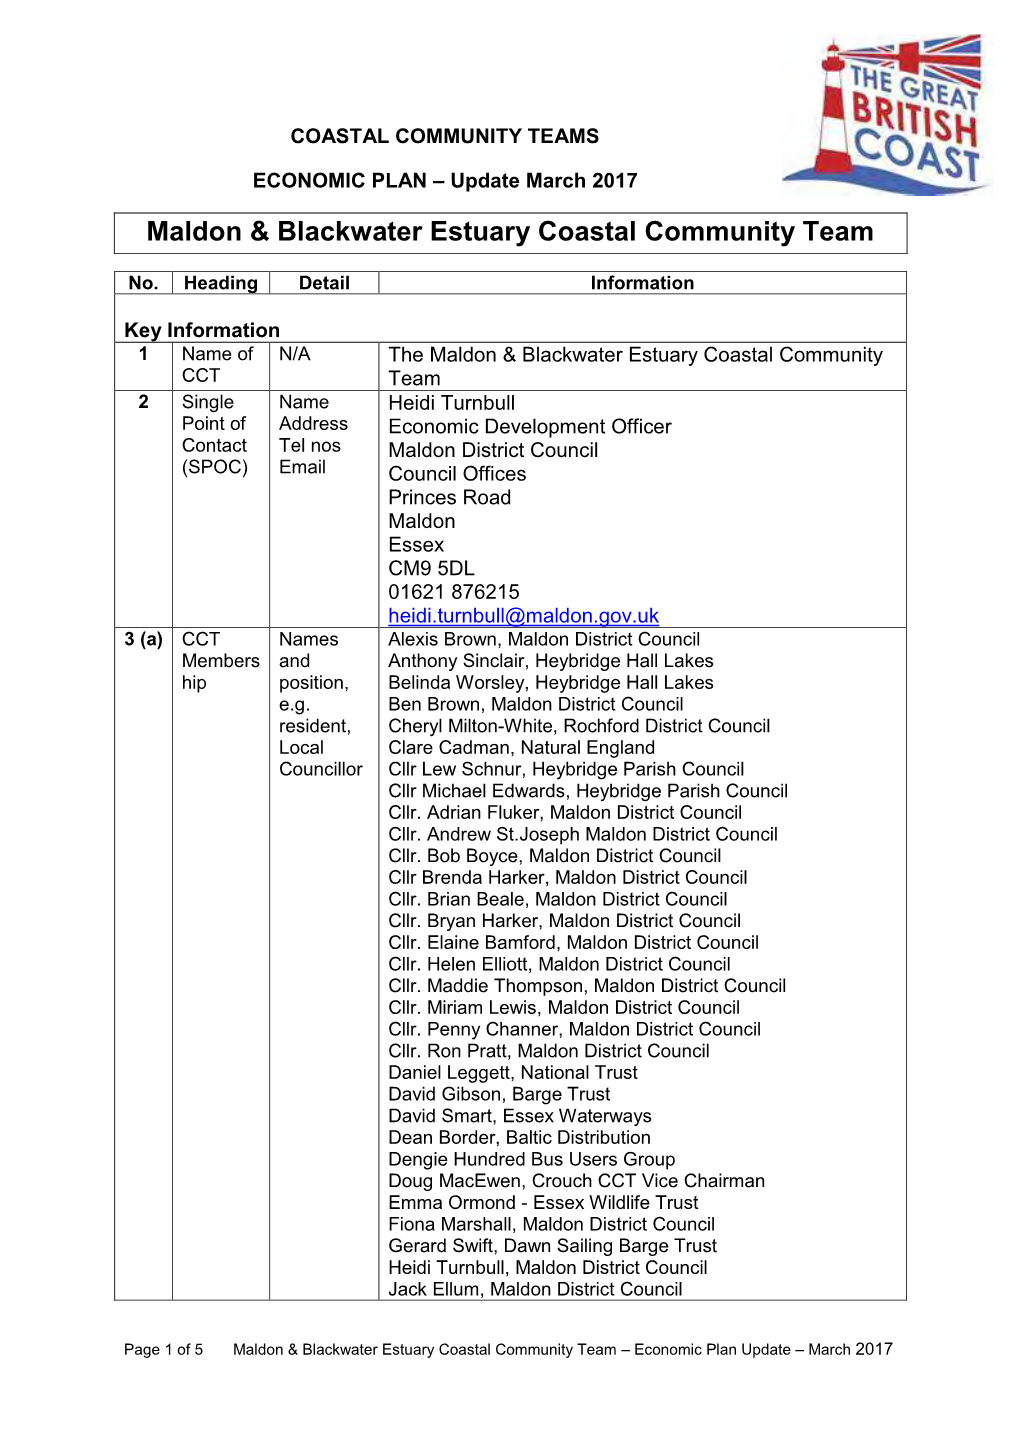 Maldon & Blackwater Estuary Coastal Community Team